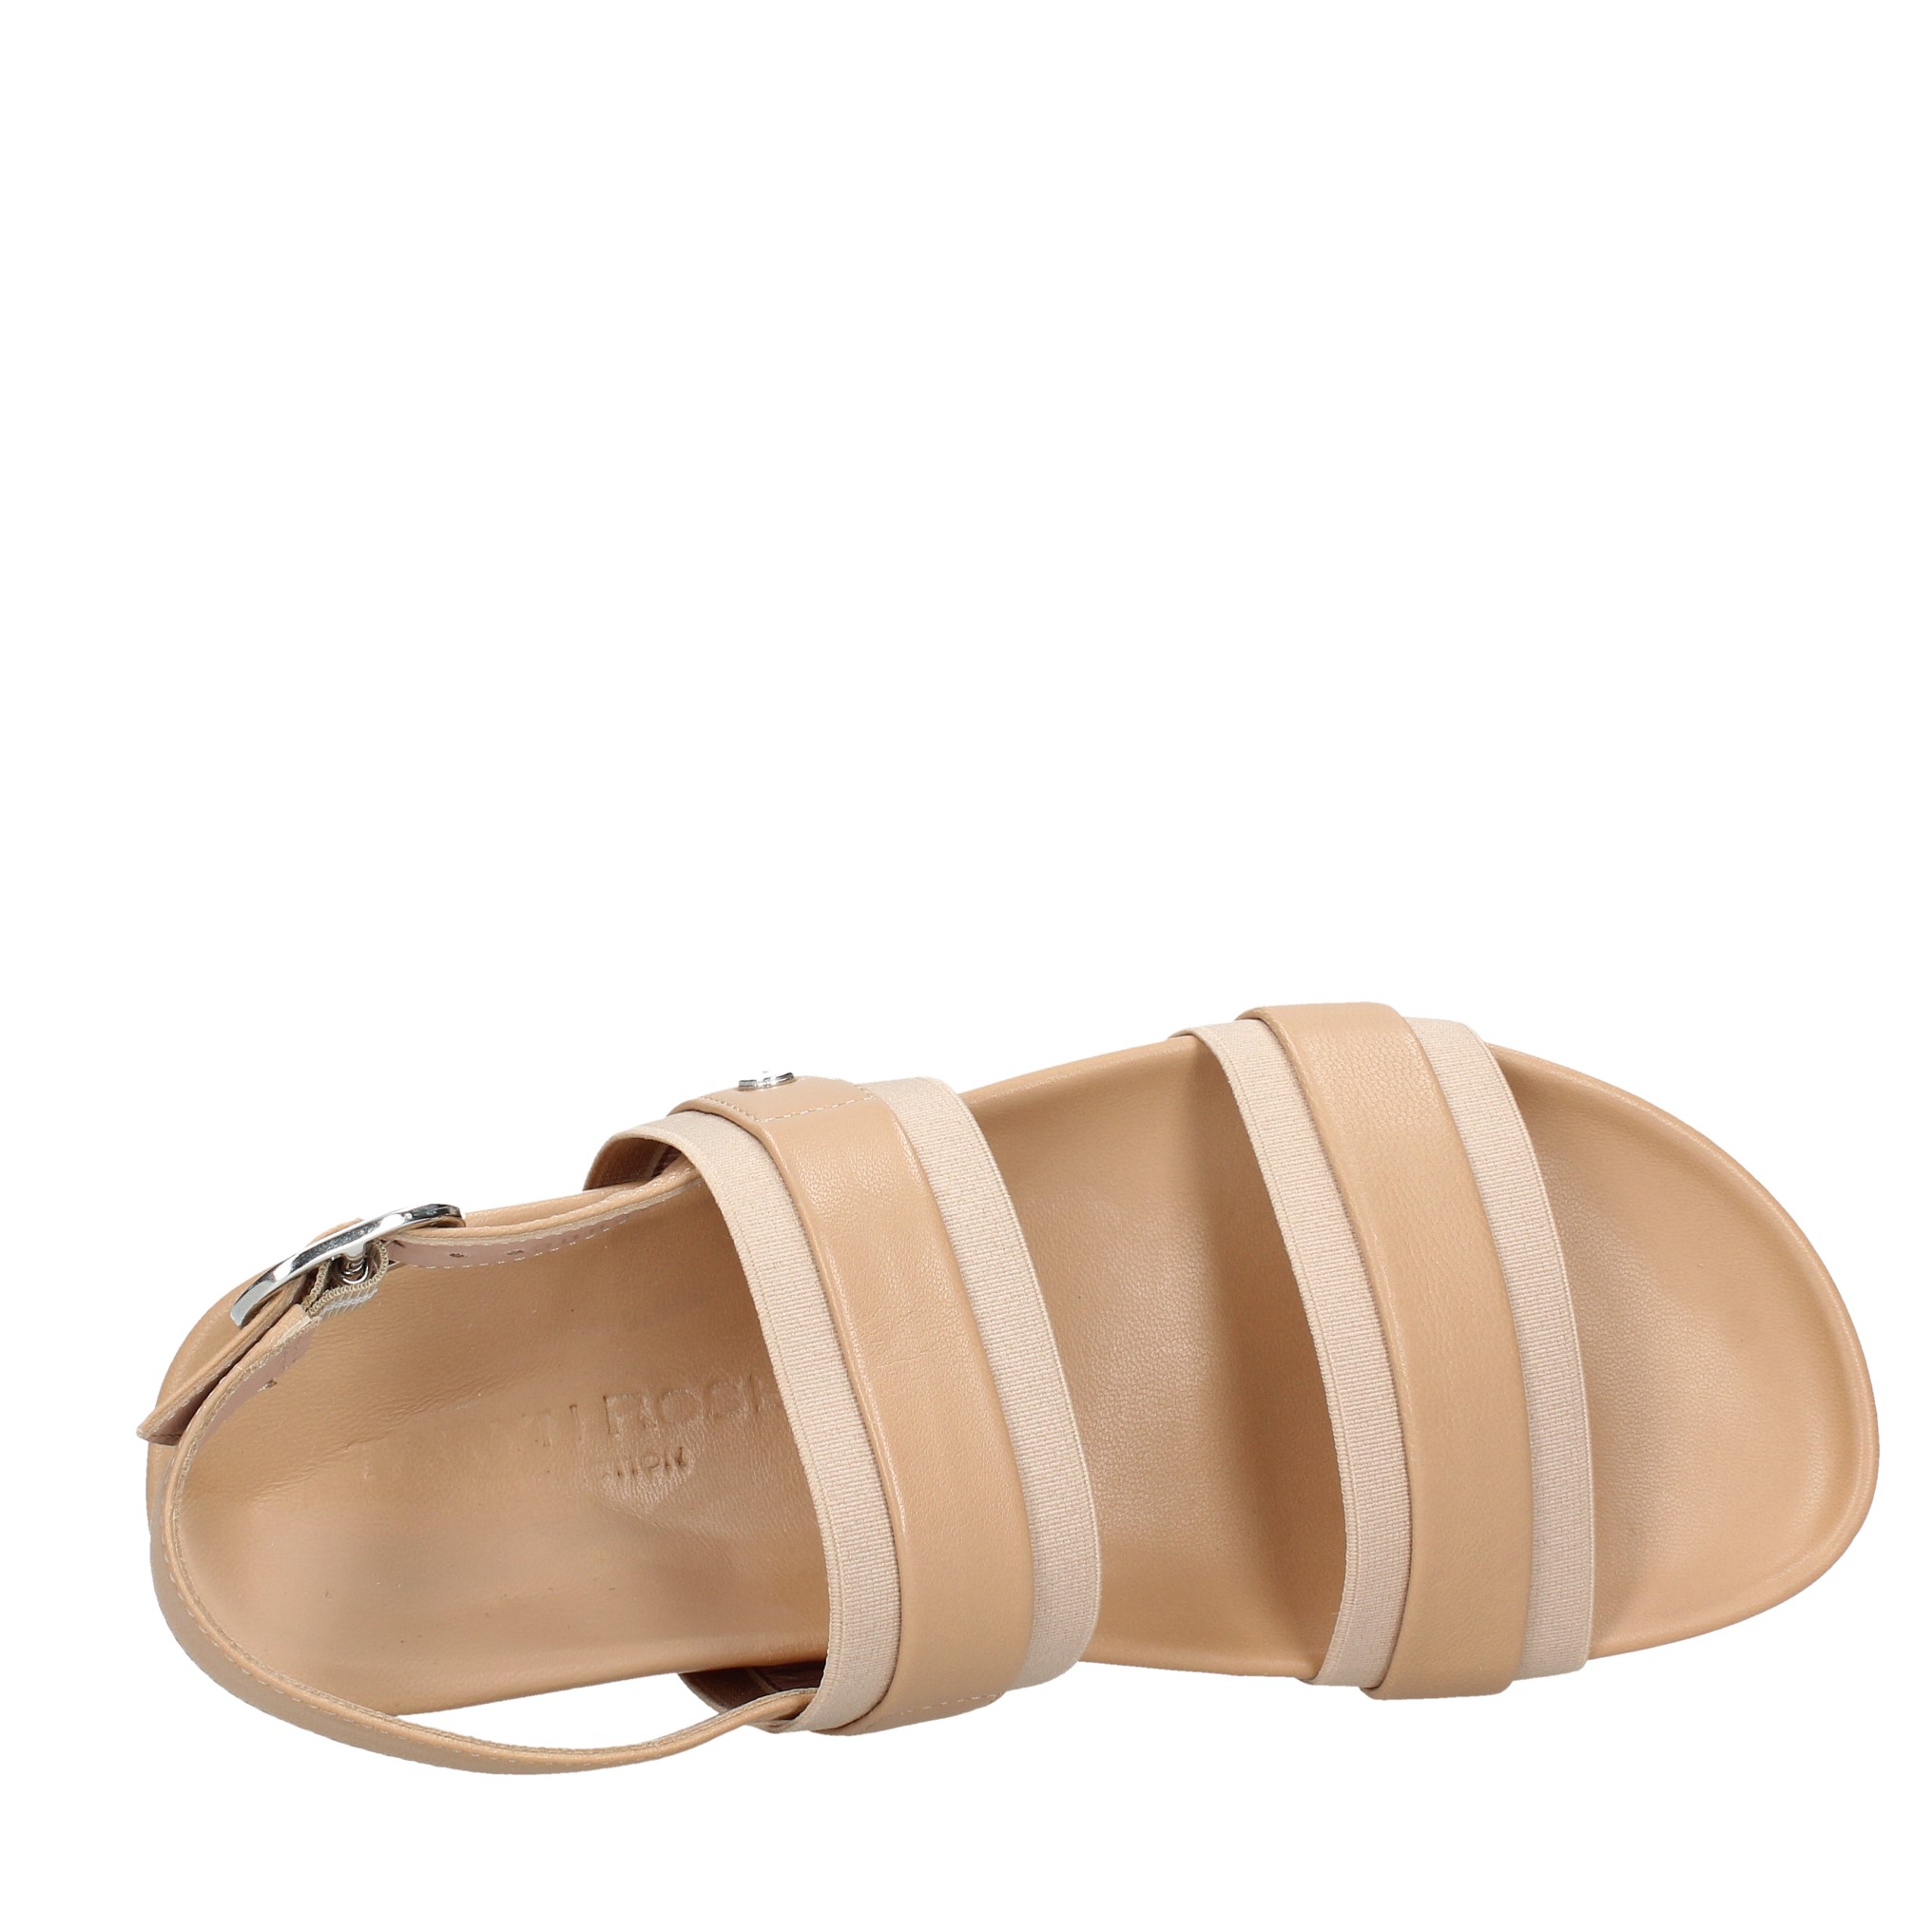 Sandals Nude - TARYN ROSE - Ginevra calzature